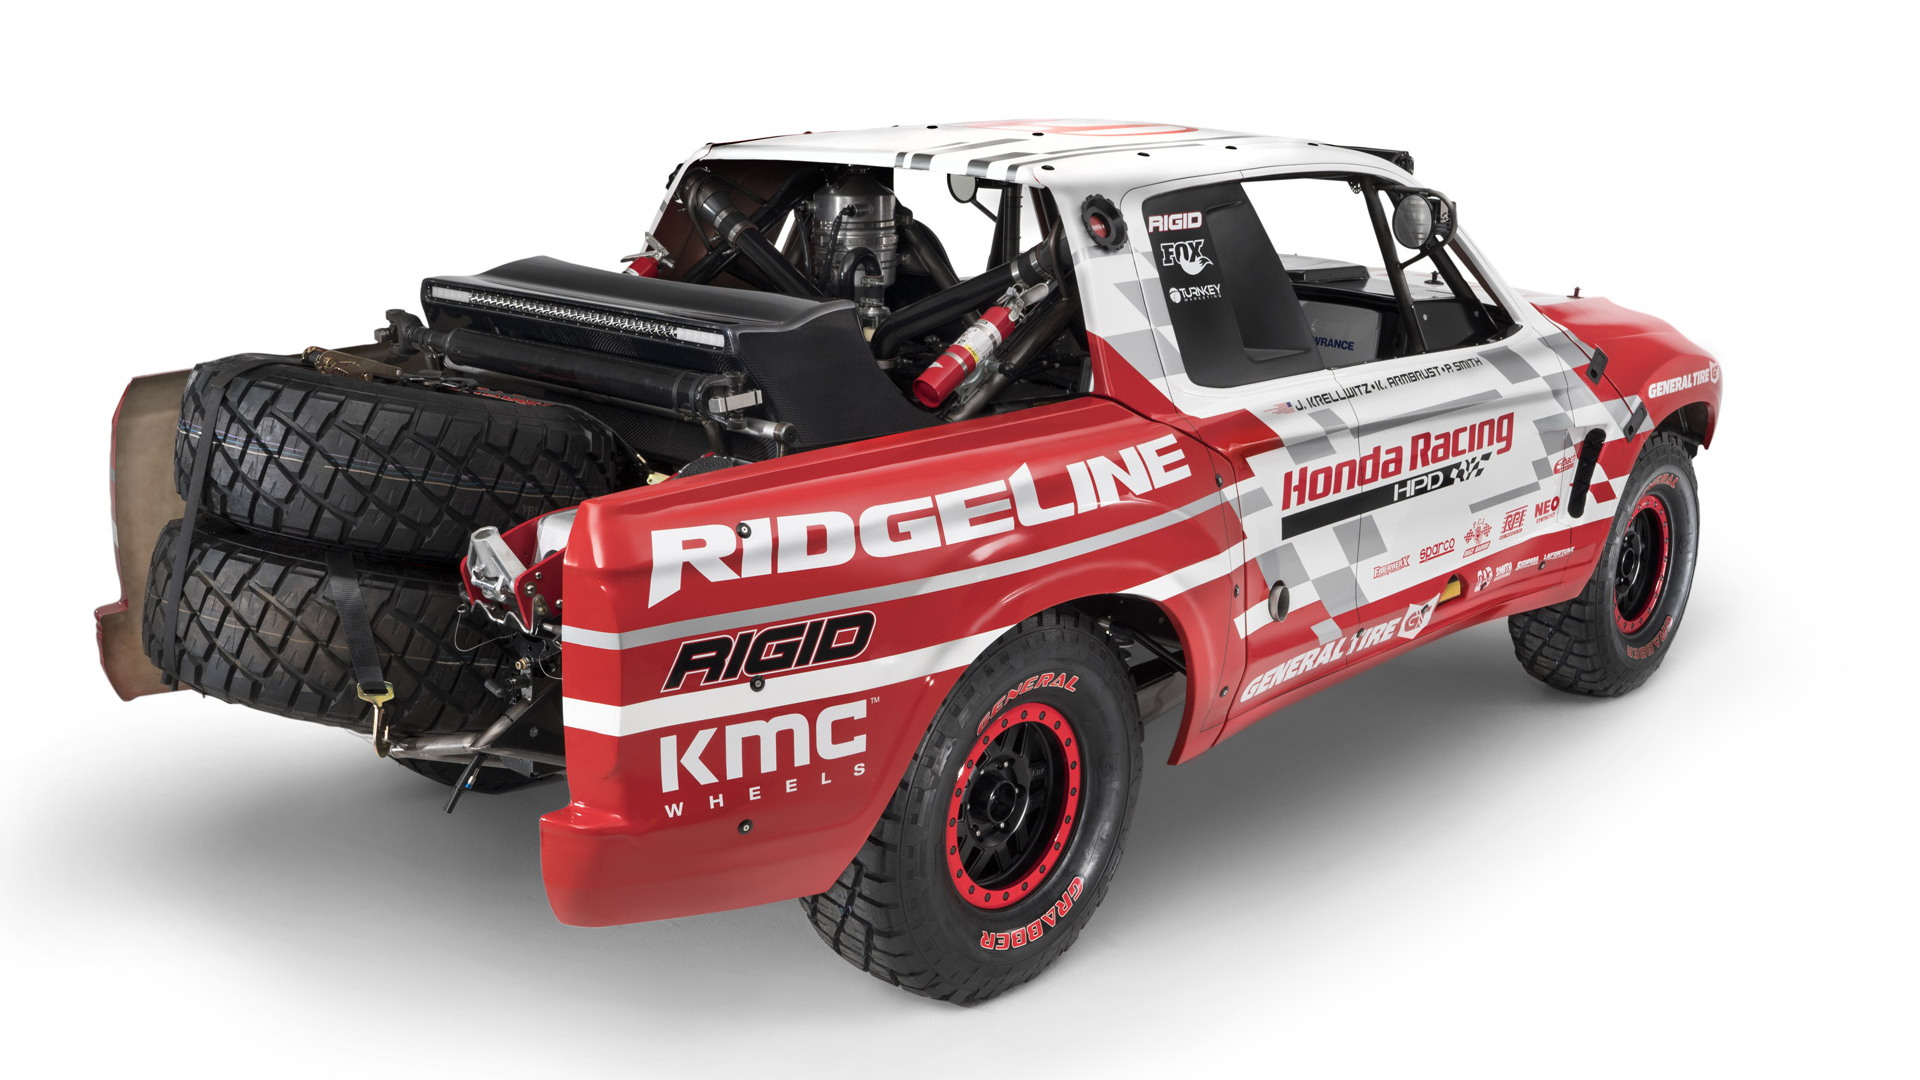 Honda Ridgeline Desert Race Truck, 2015 SEMA show